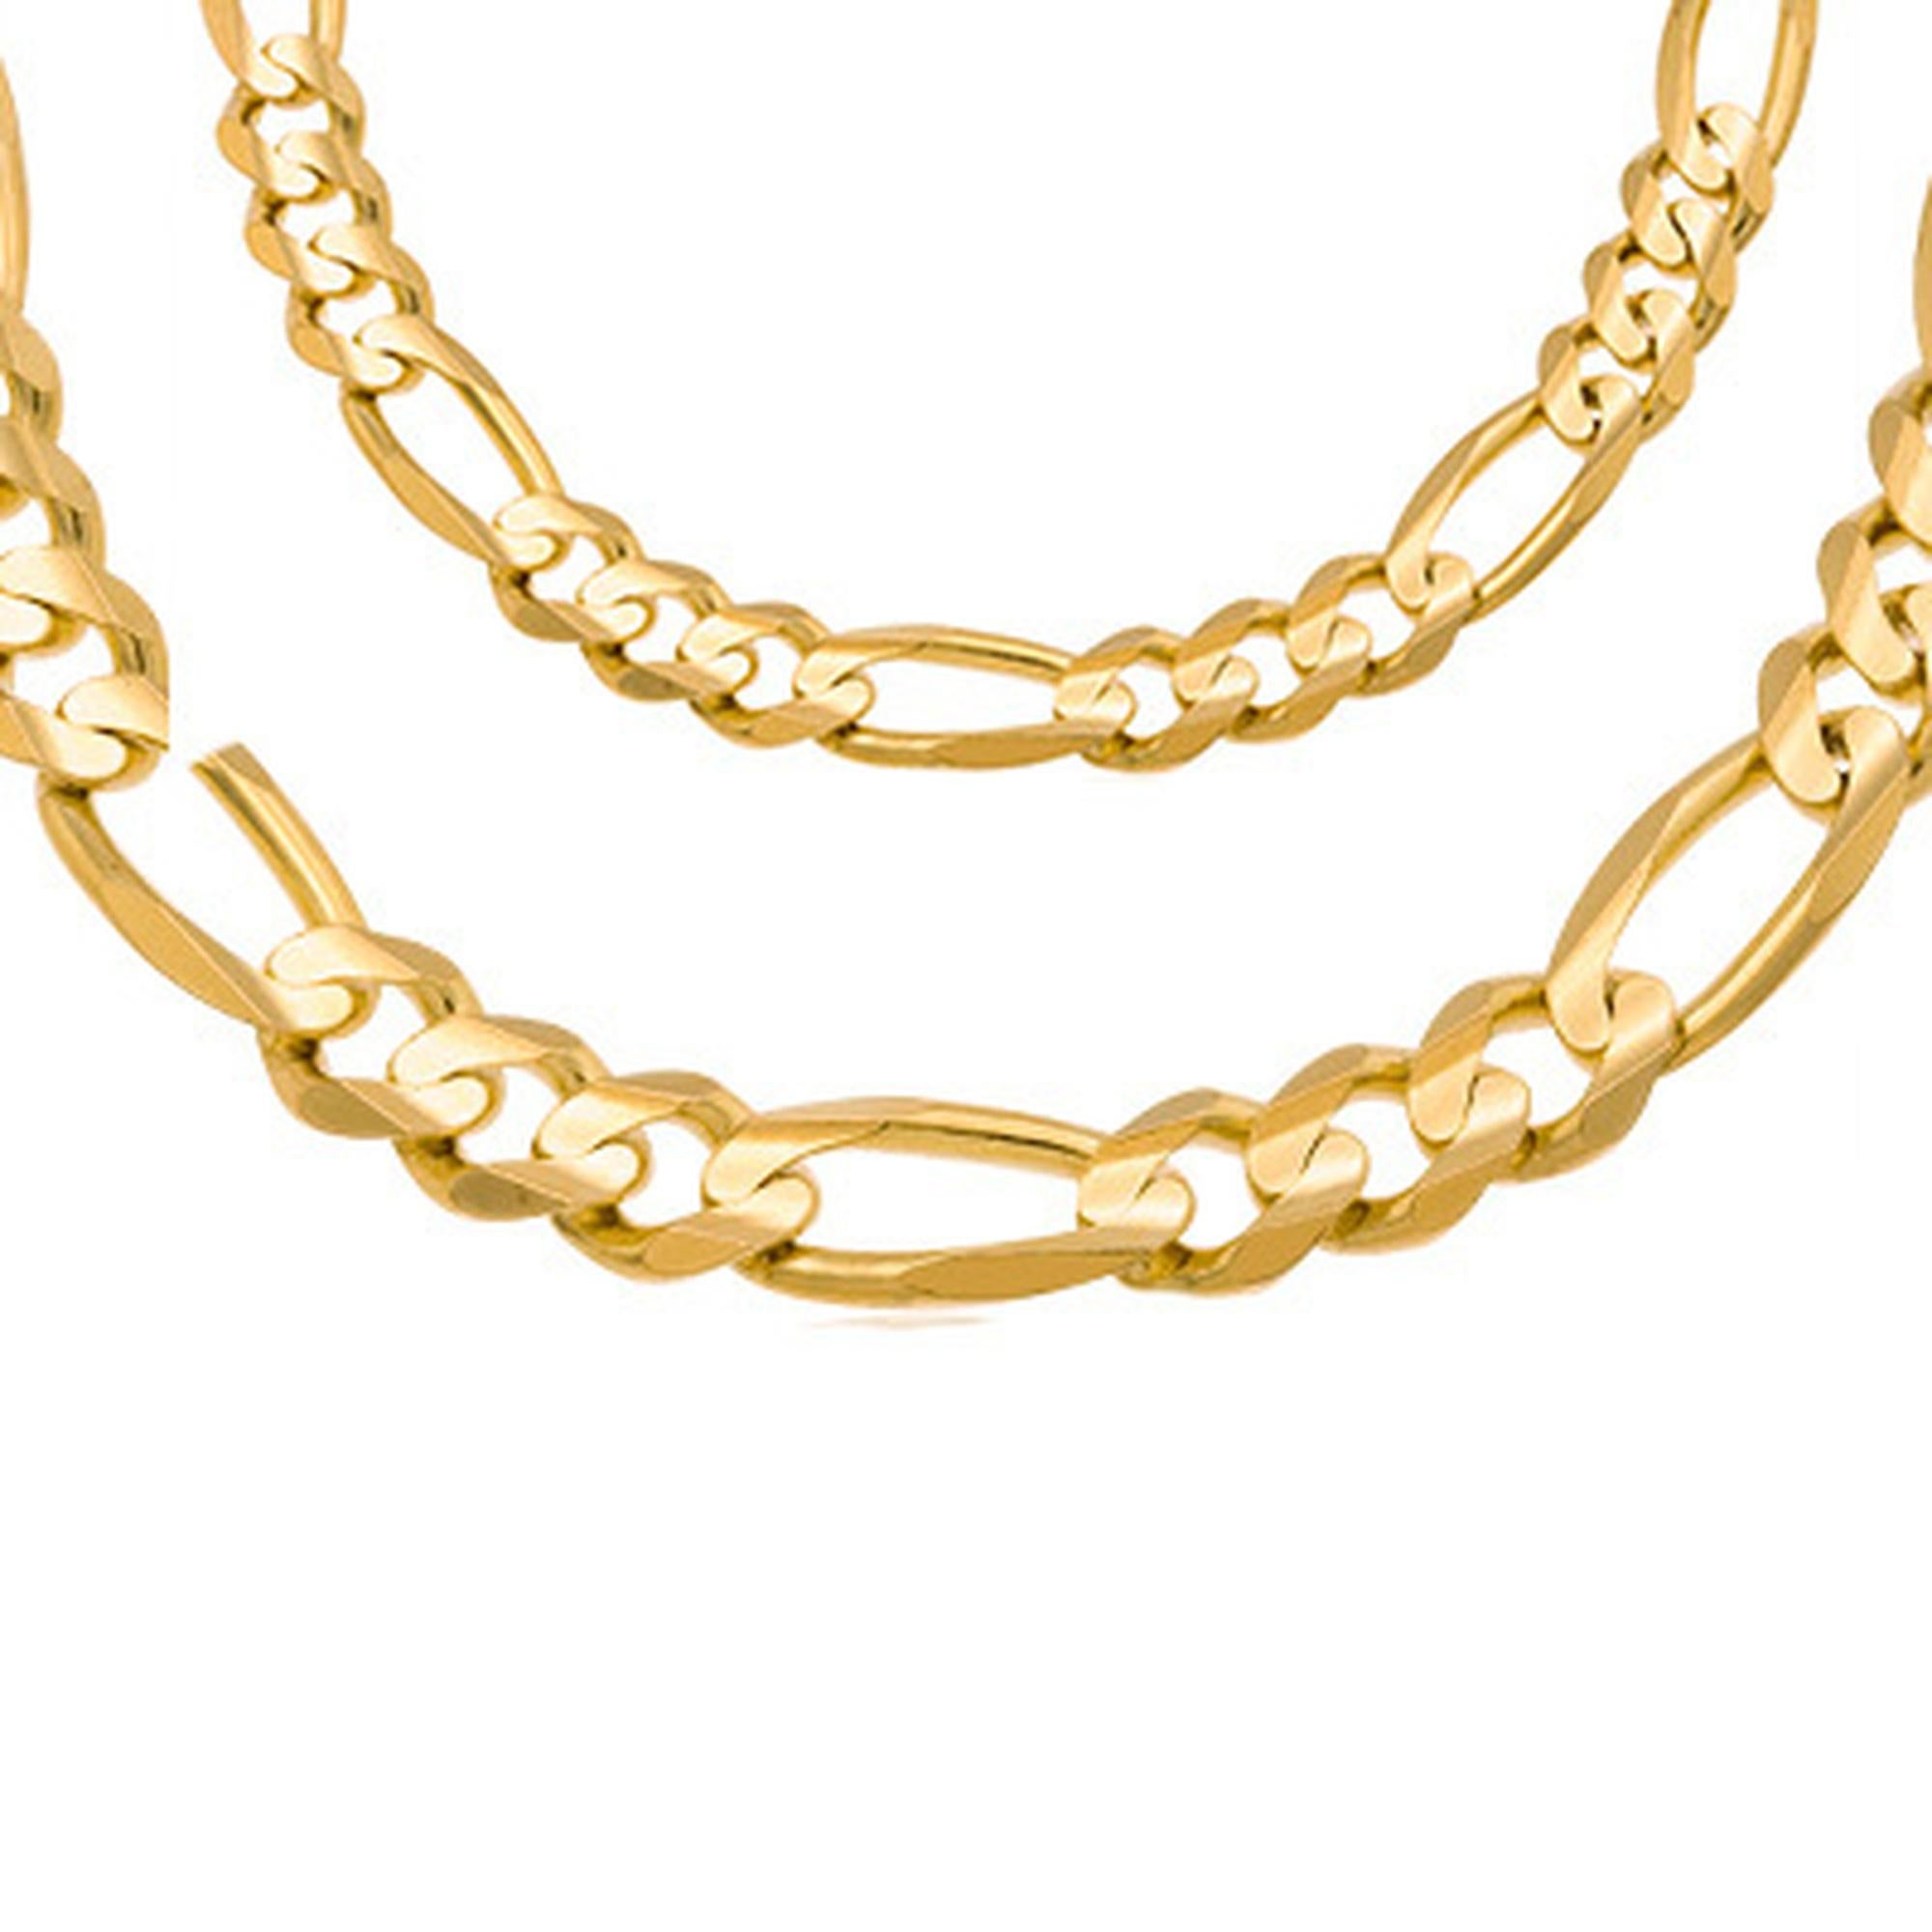 4 gram gold chain